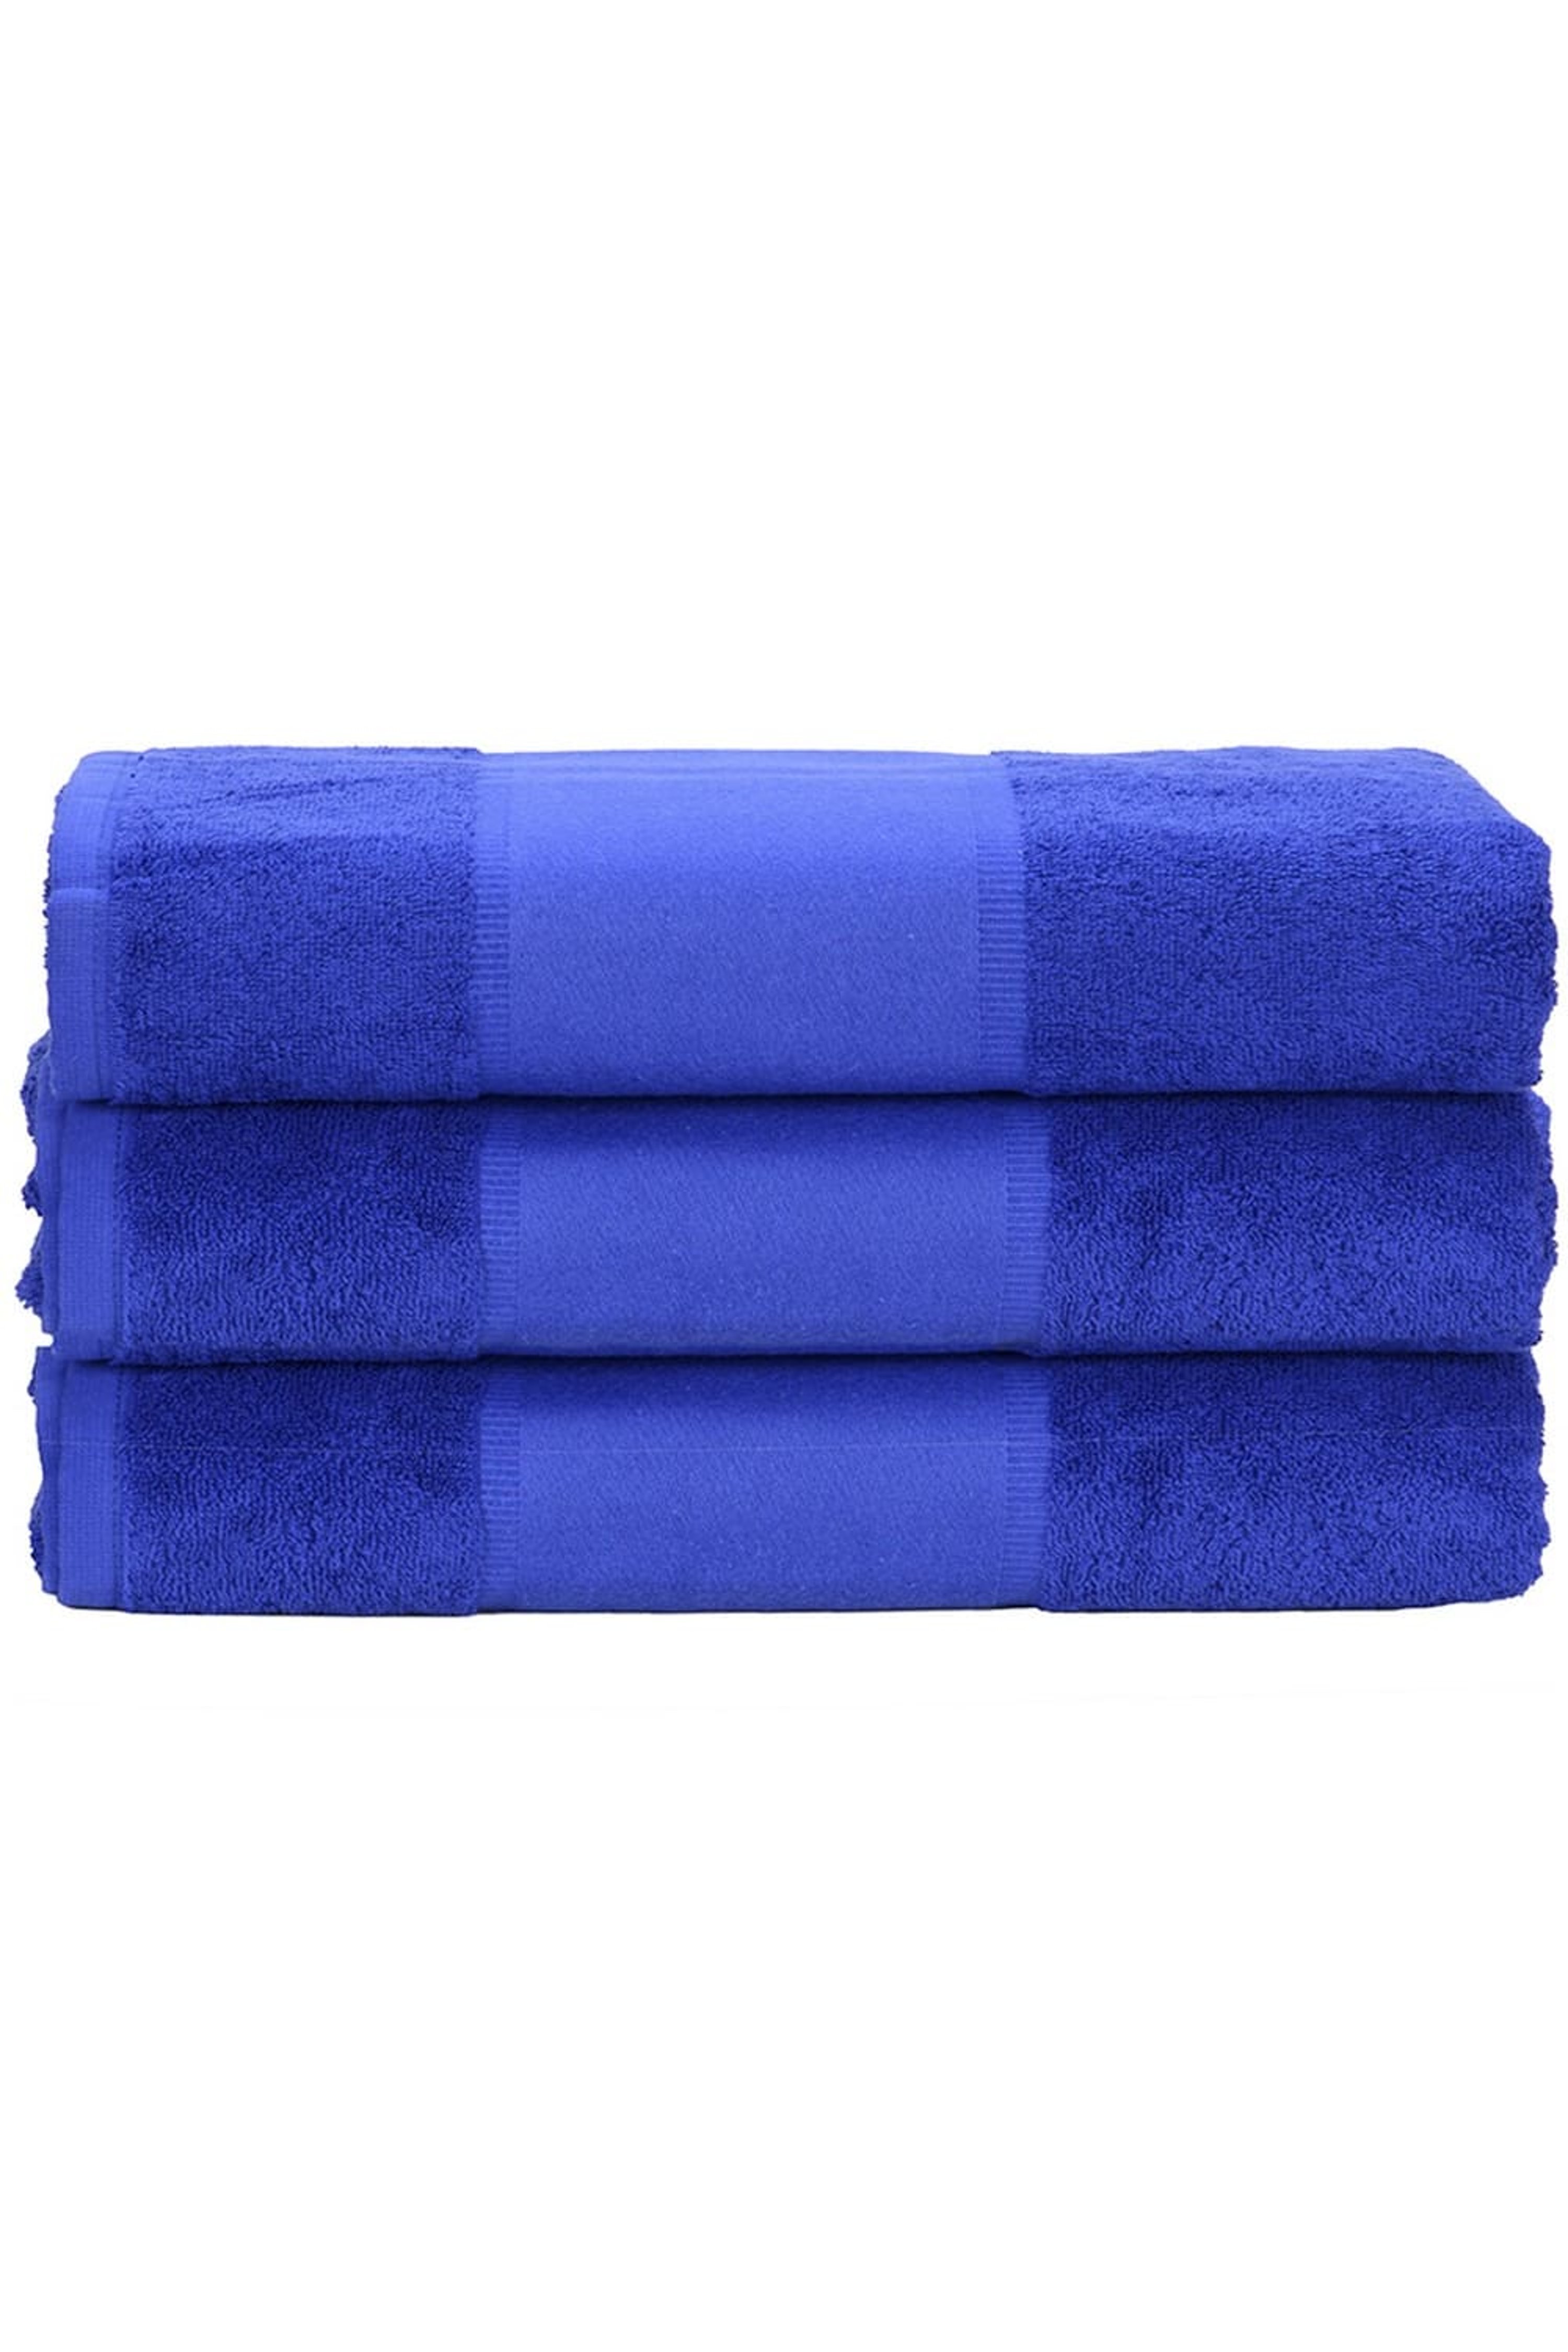 A&R TOWELS A&R TOWELS A&R TOWELS PRINT-ME HAND TOWEL (TRUE BLUE) (ONE SIZE)